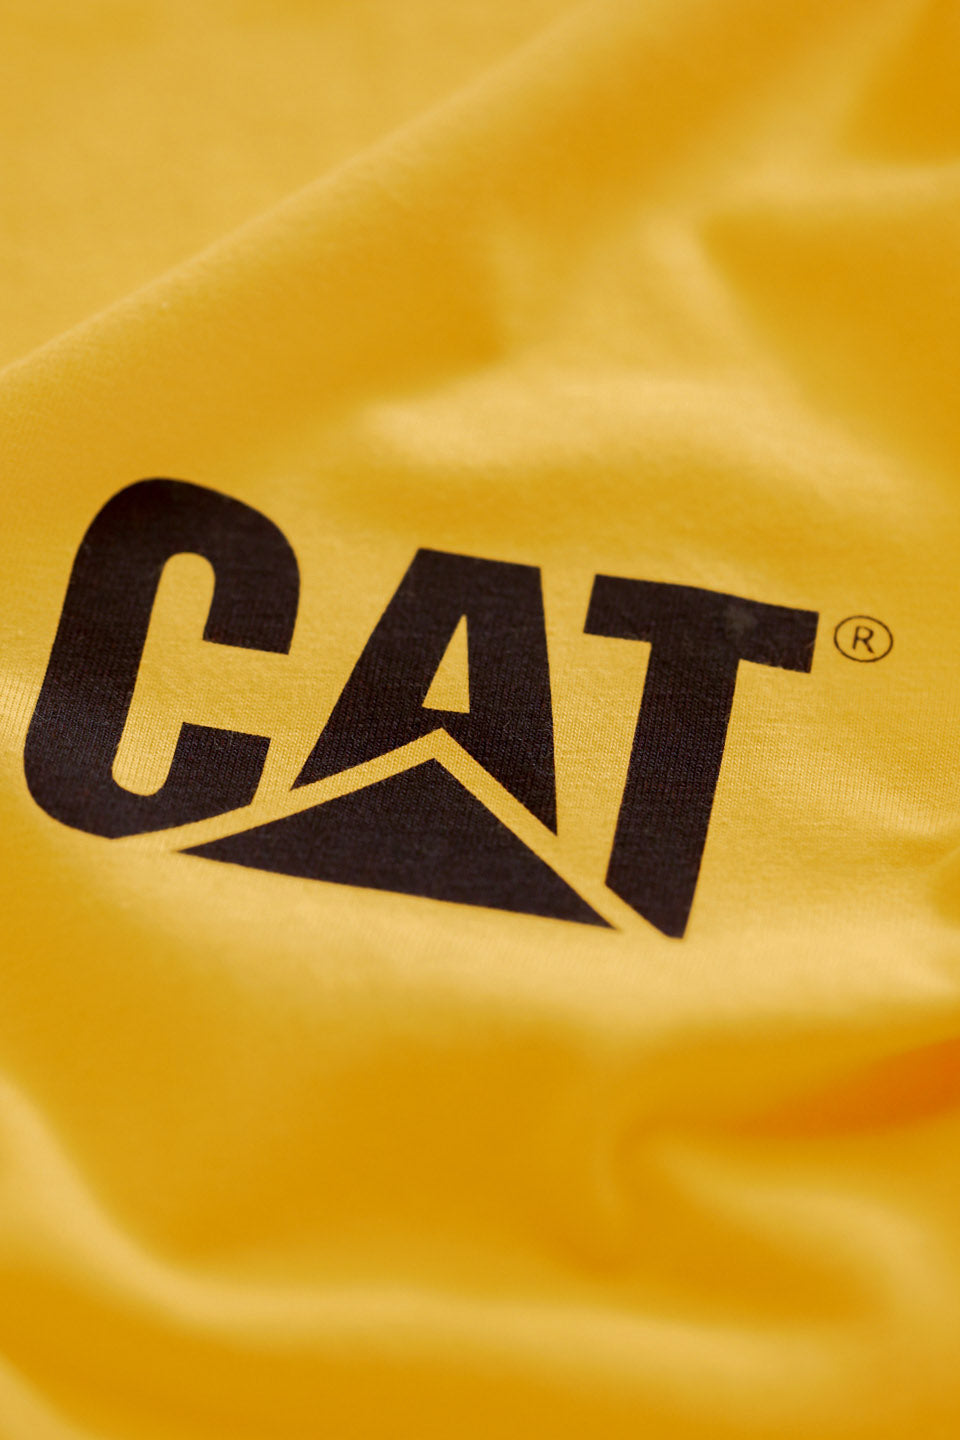 CAT Small Logo T-Shirt